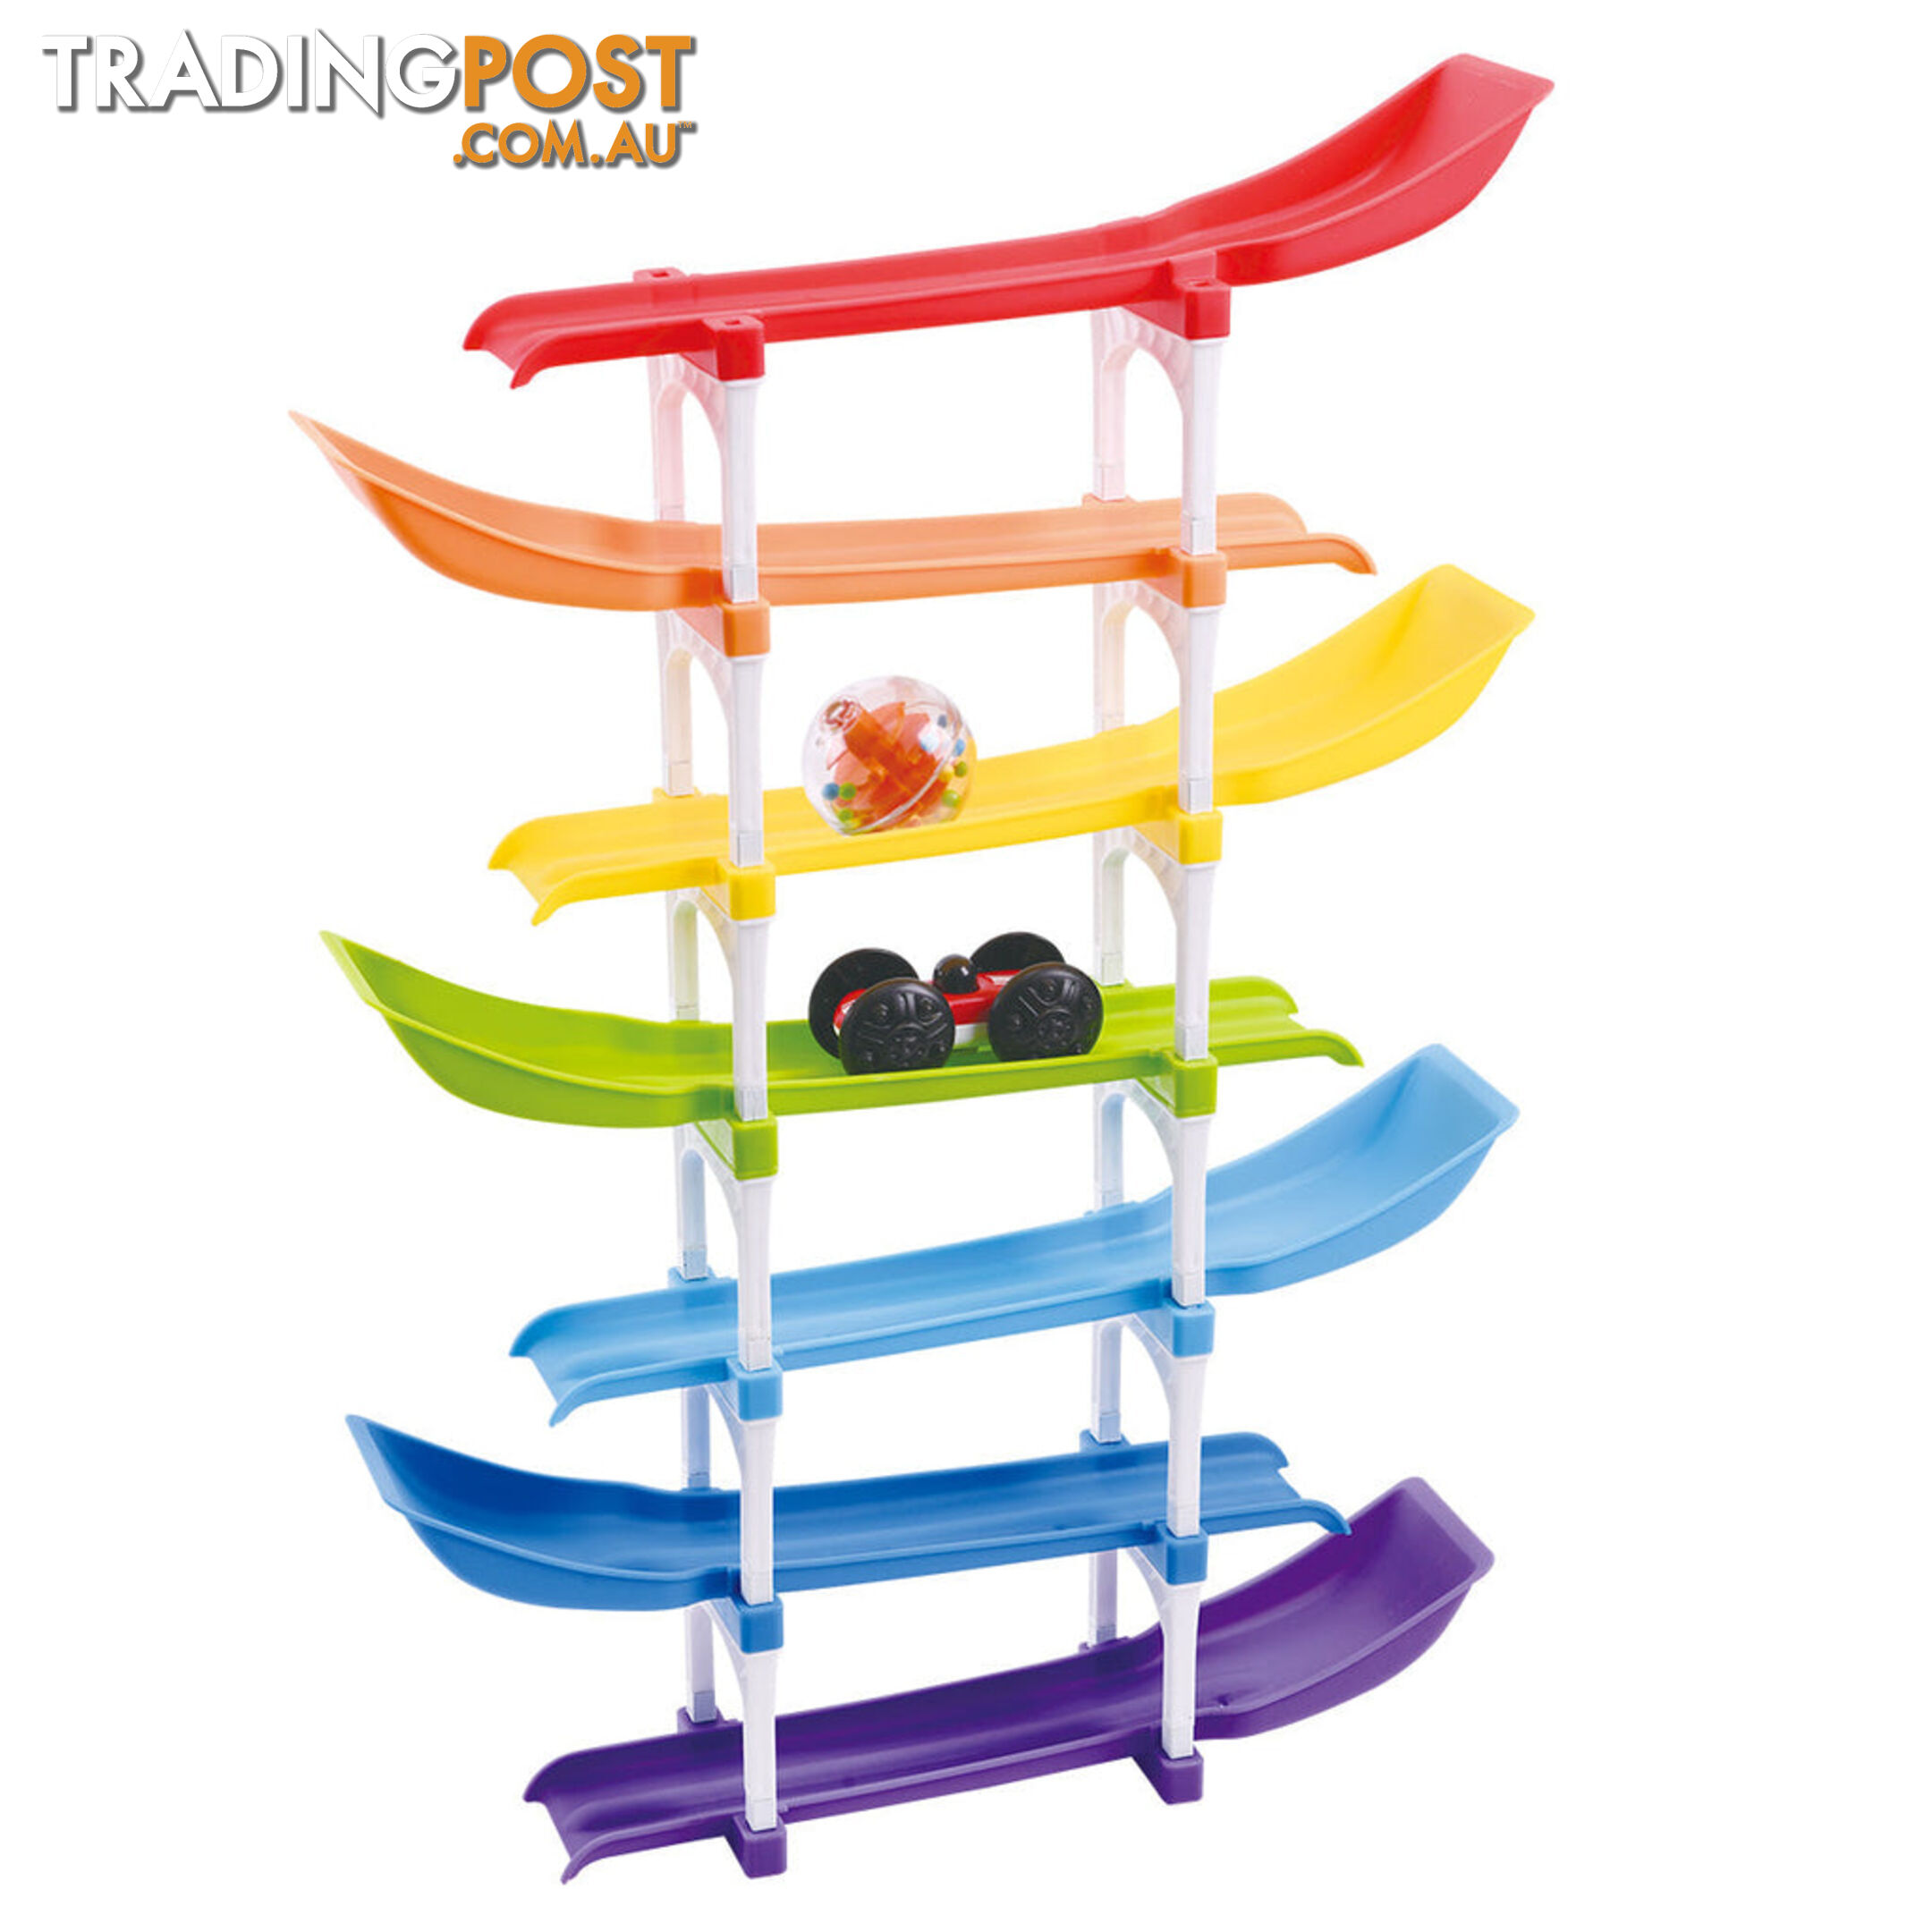 Speedy Tower Racer Playgo Toys Ent. Ltd. - Art65917 - 4892401022691